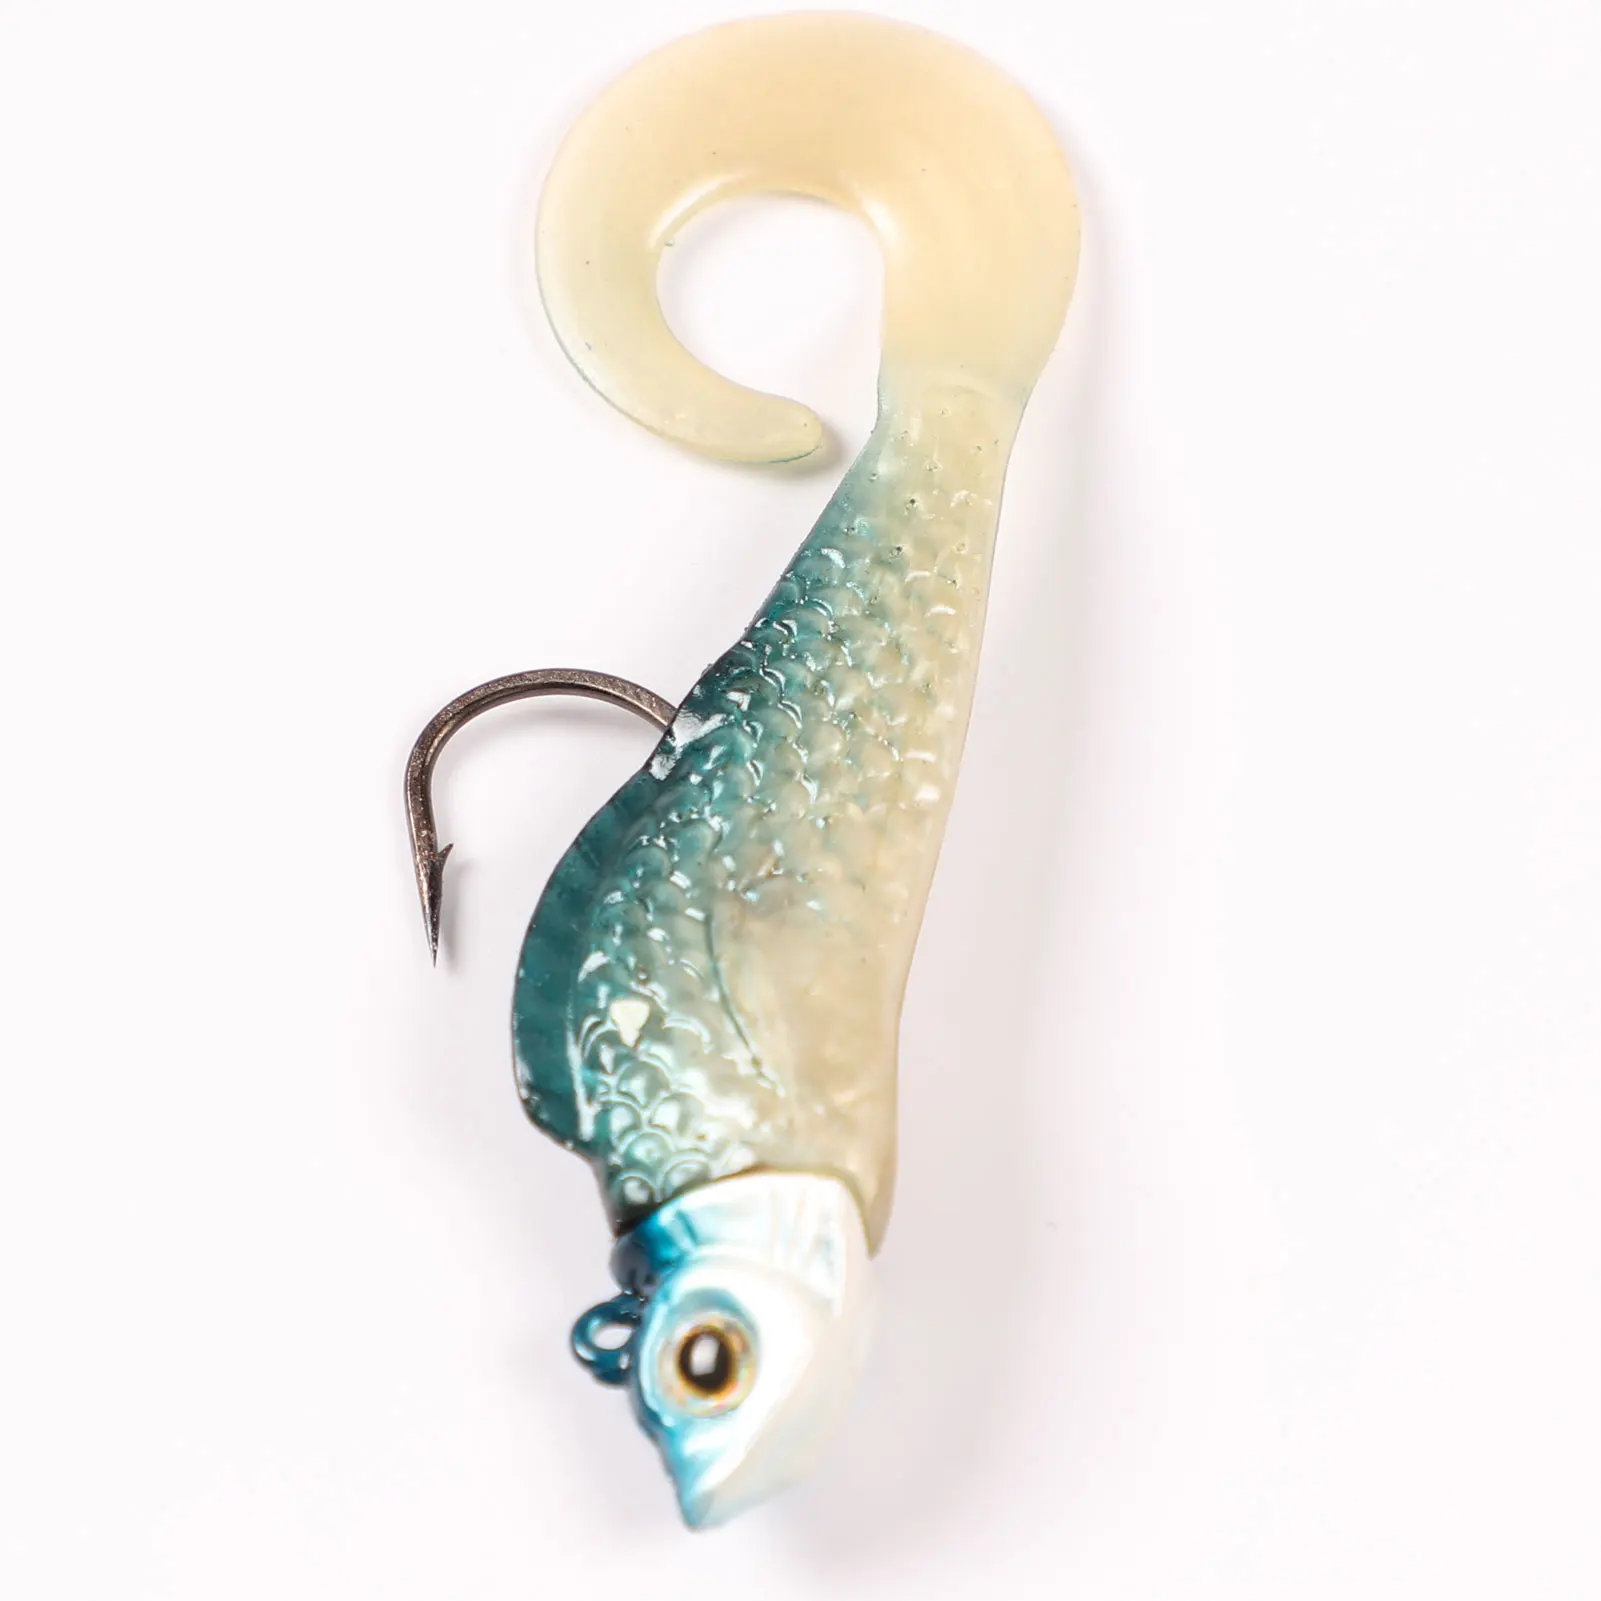 

8 pcs Free Fisher Lead Head Fishing Soft Bait Lure 8cm 12g 7.7cm 9g Jig Pesca Fishing Lures Fishing 3D Eye Tackle Accessories